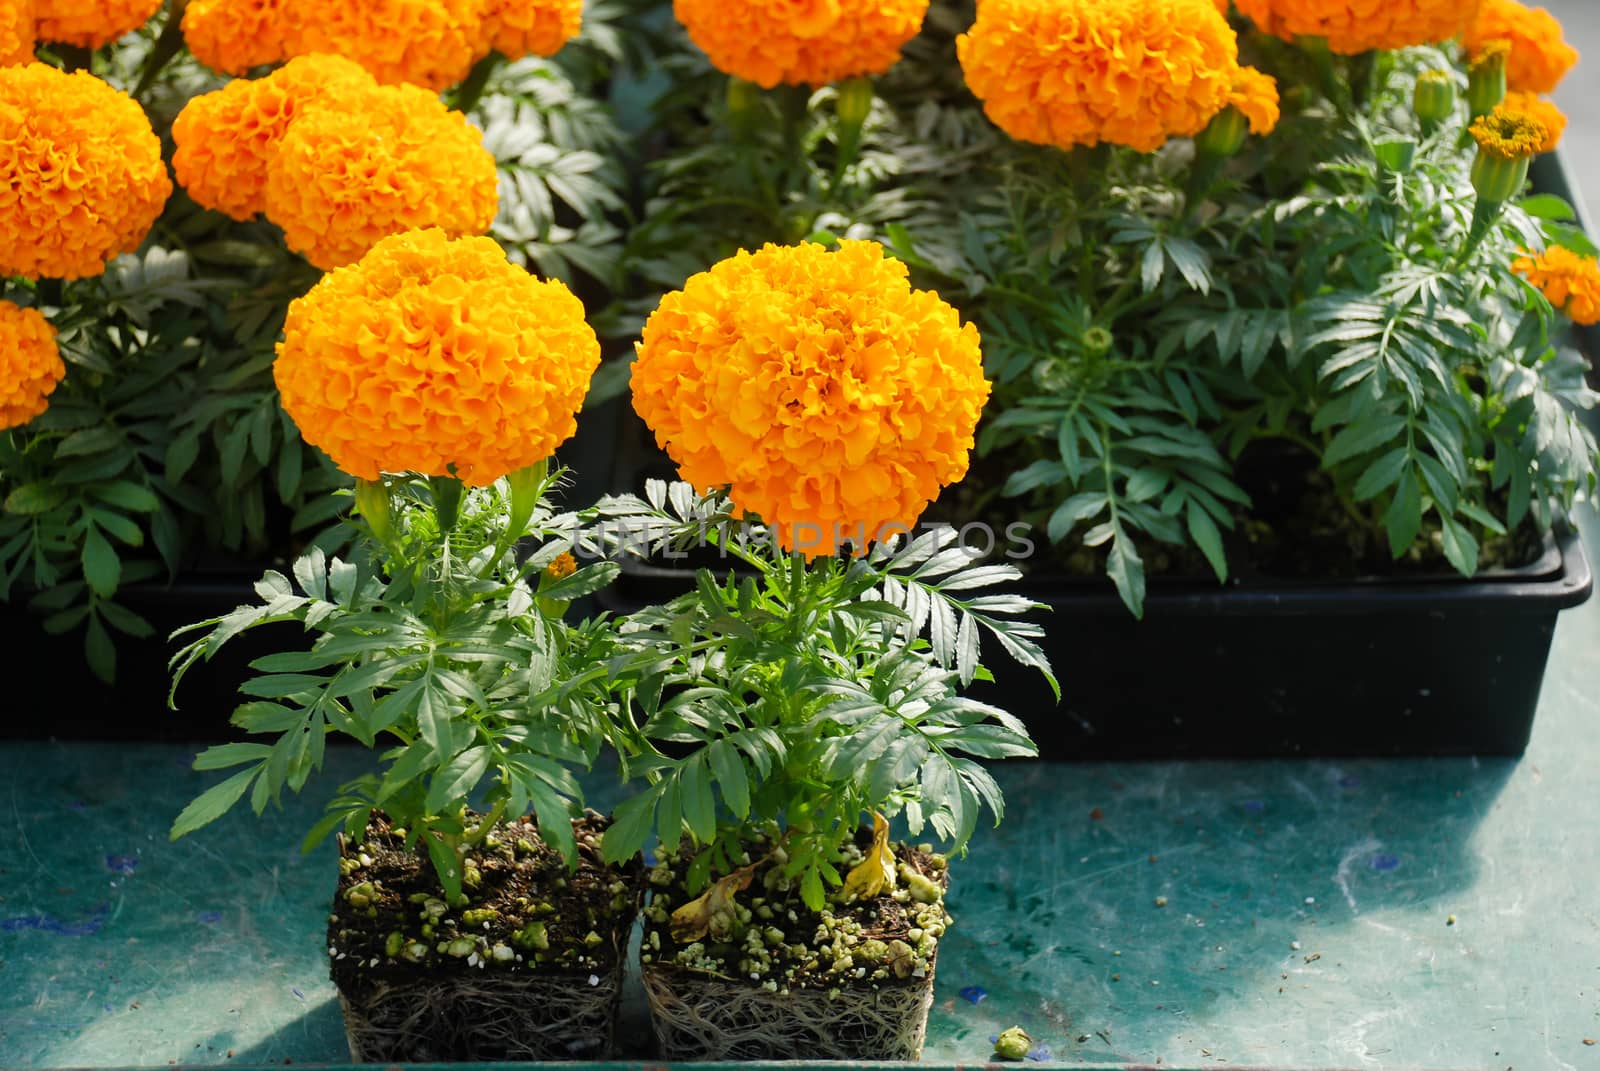 Marigolds Orange Color (Tagetes erecta, Mexican marigold) by yuiyuize